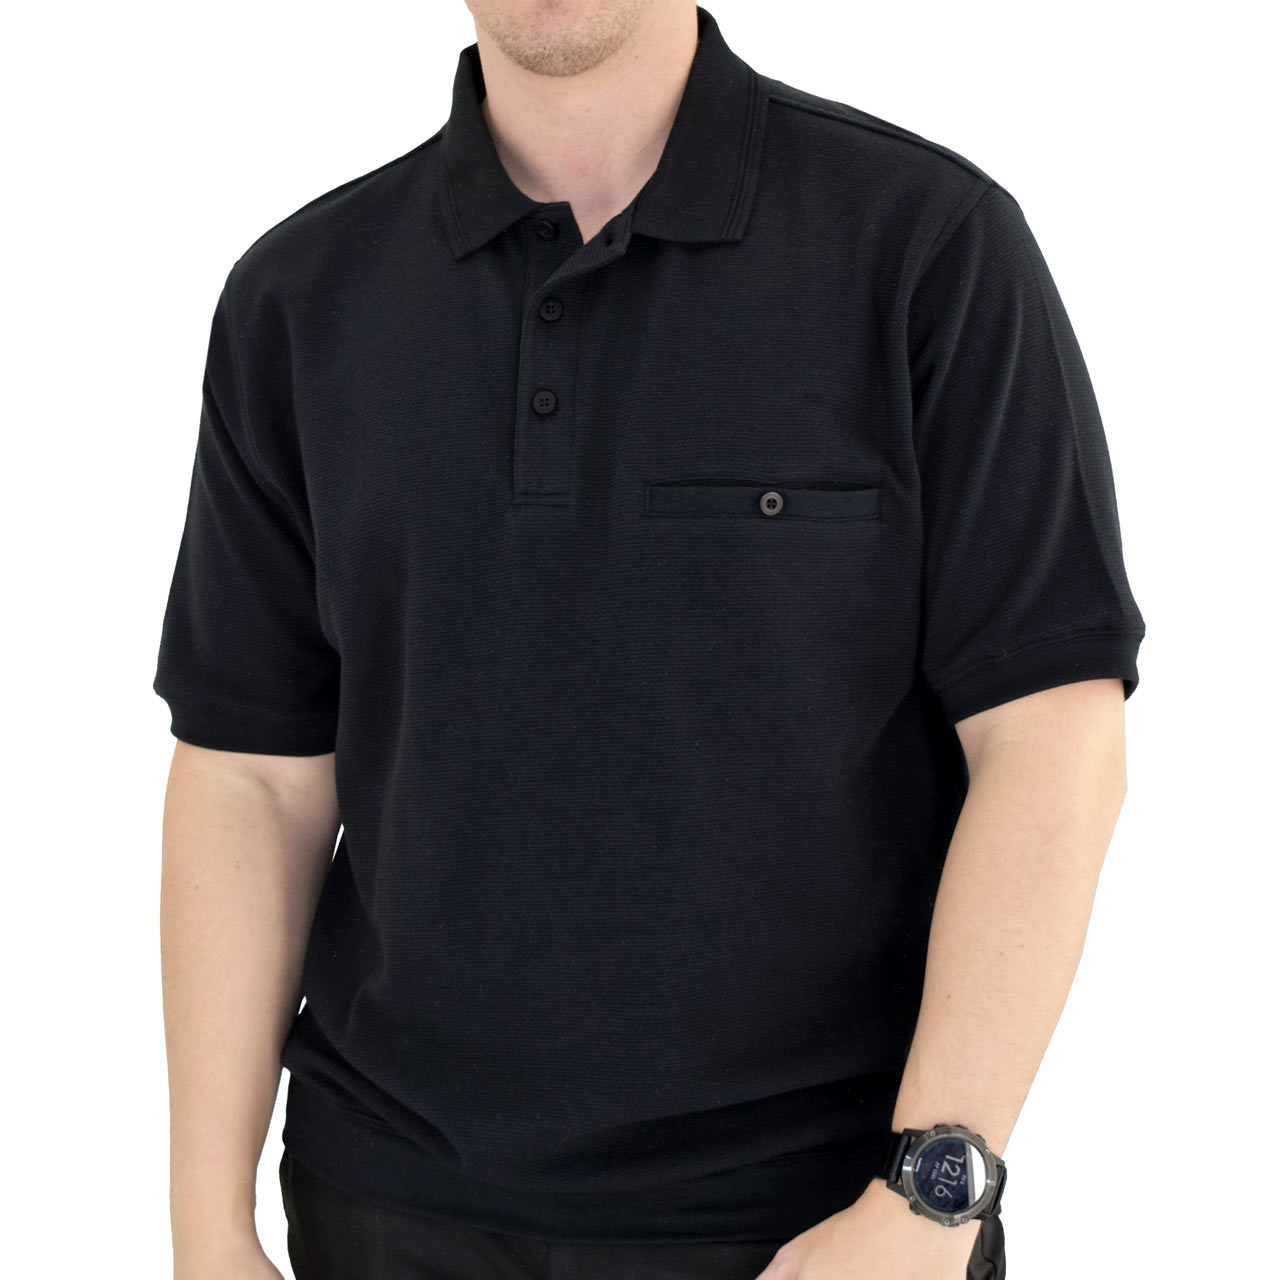 Men's Classics By Palmland Short Sleeve Polo Knit Banded Bottom Shirt #6070-100 Black